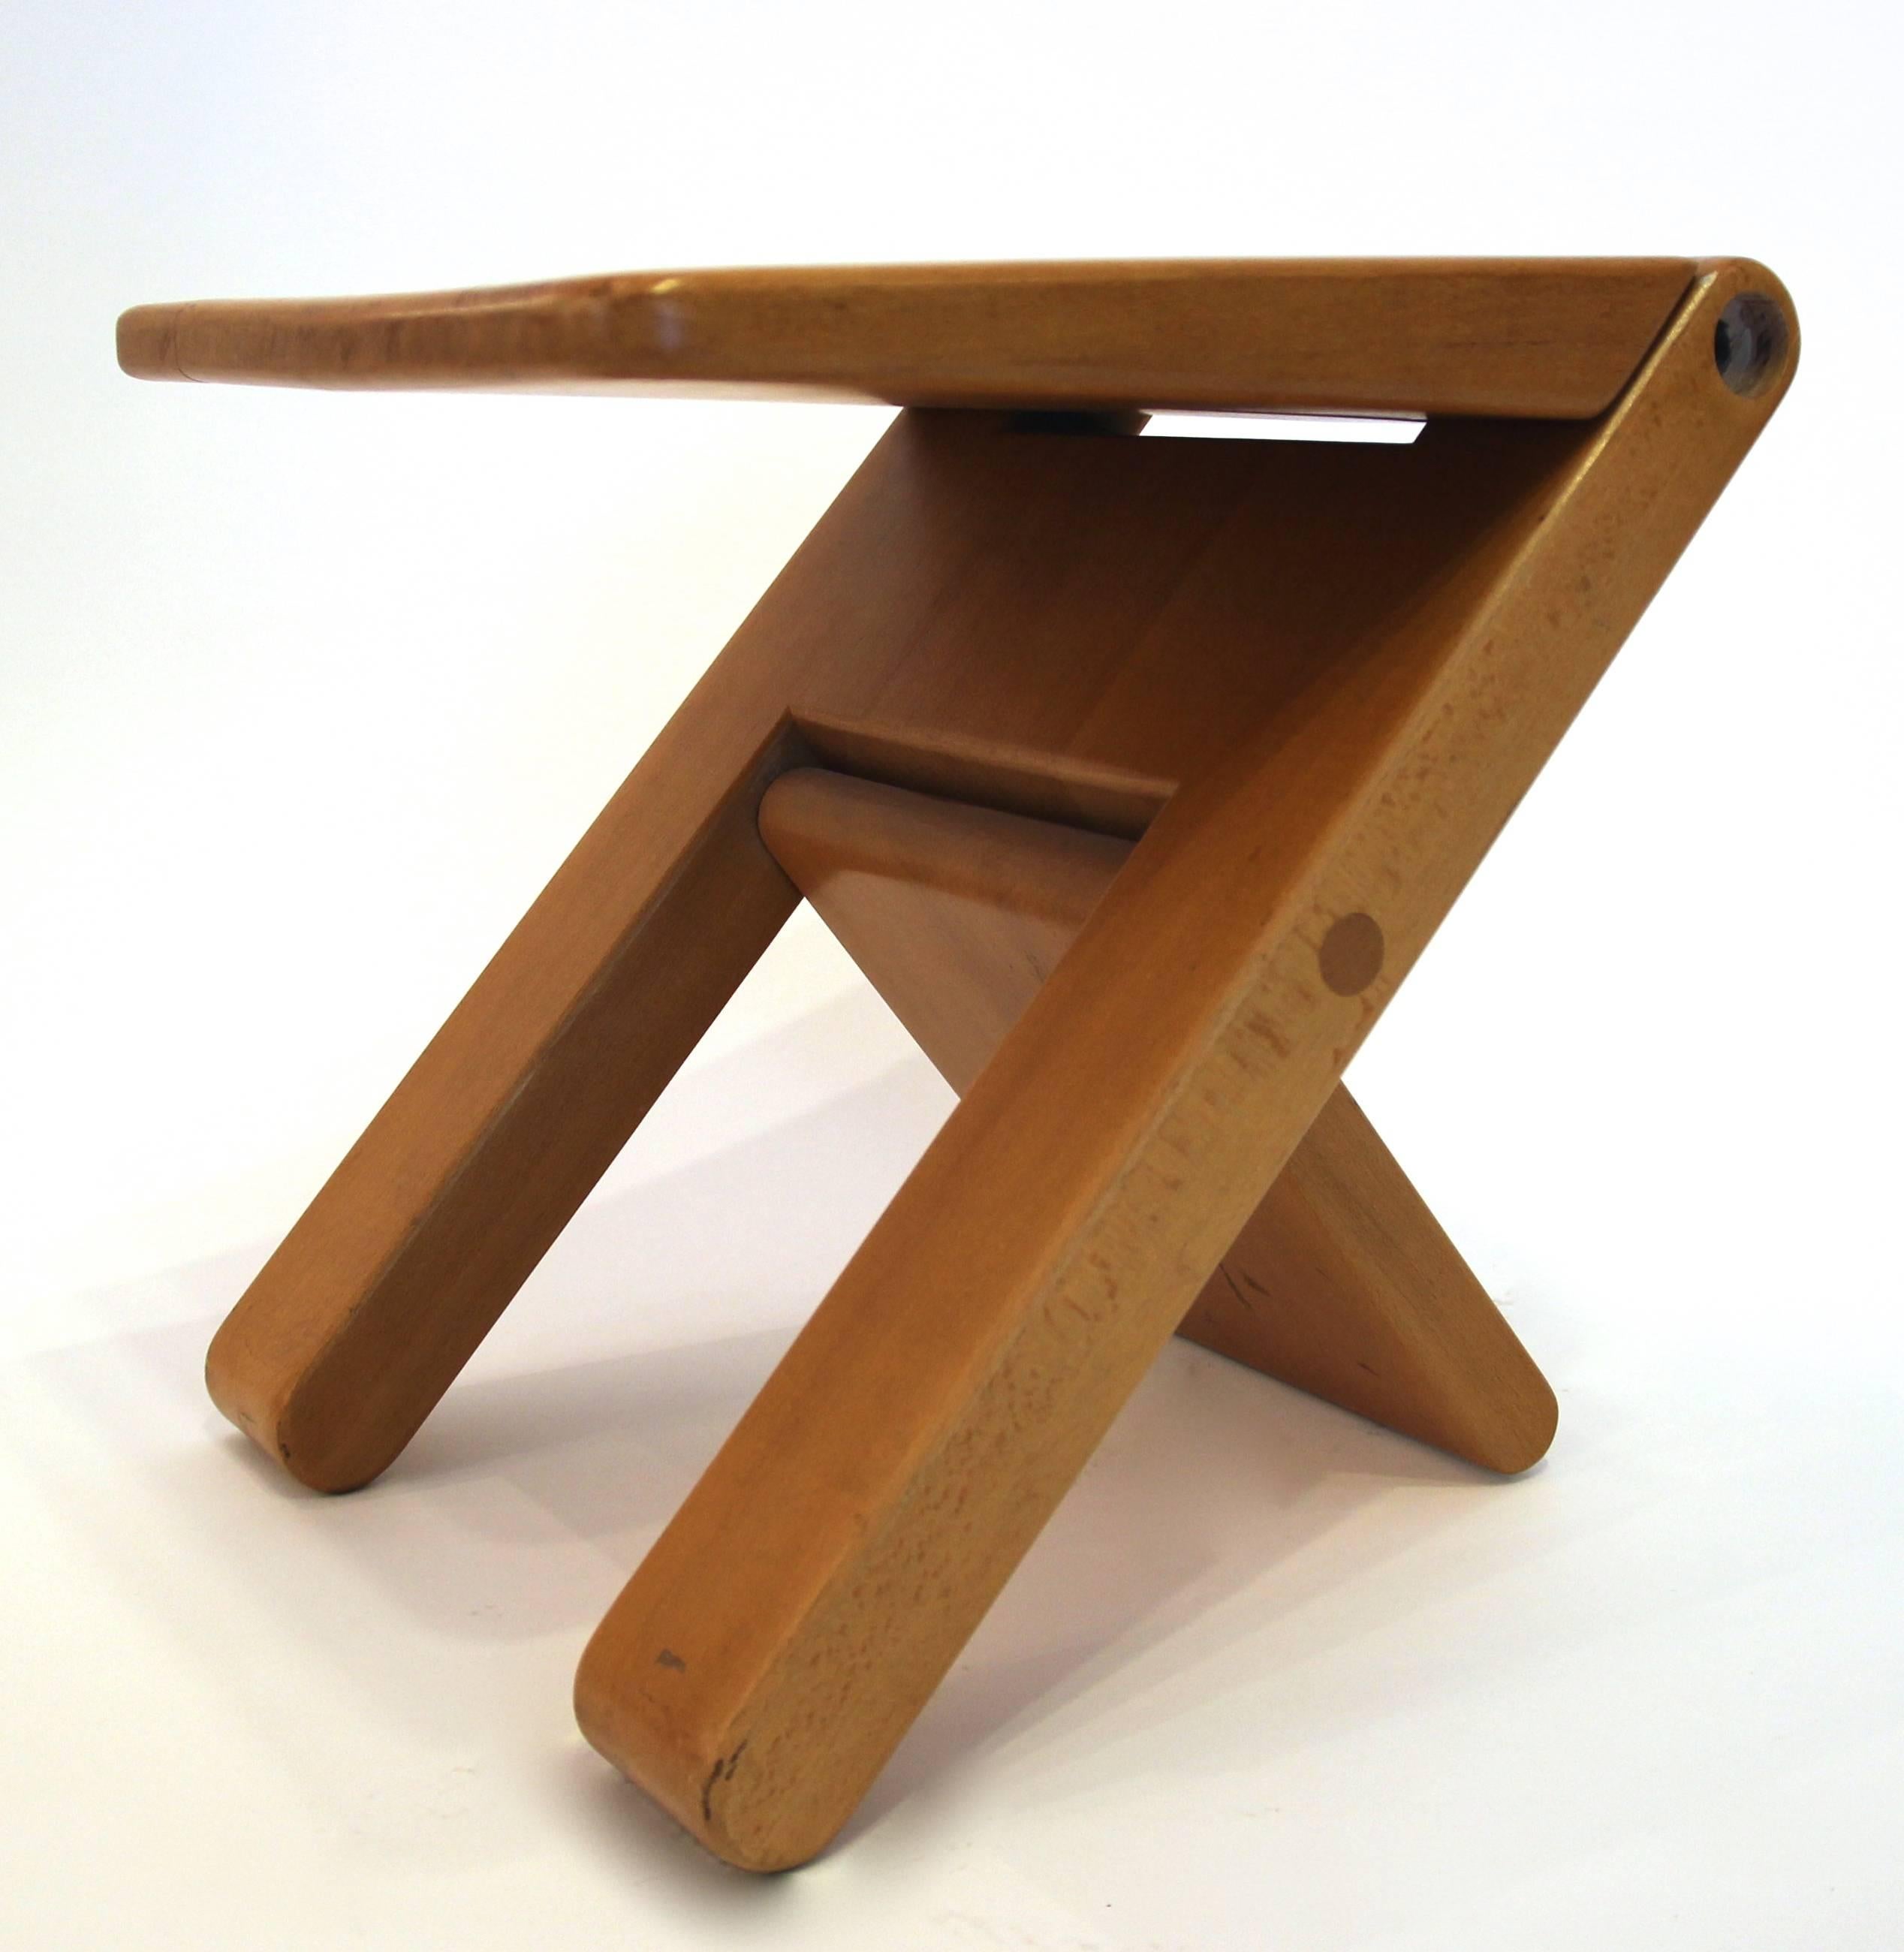 Marcel Ramond (1935)
Folding stool,
beech,
Form Design edition,
Circa 1979, France.
Height: 40 cm, width: 38 cm, depth: 38 cm.